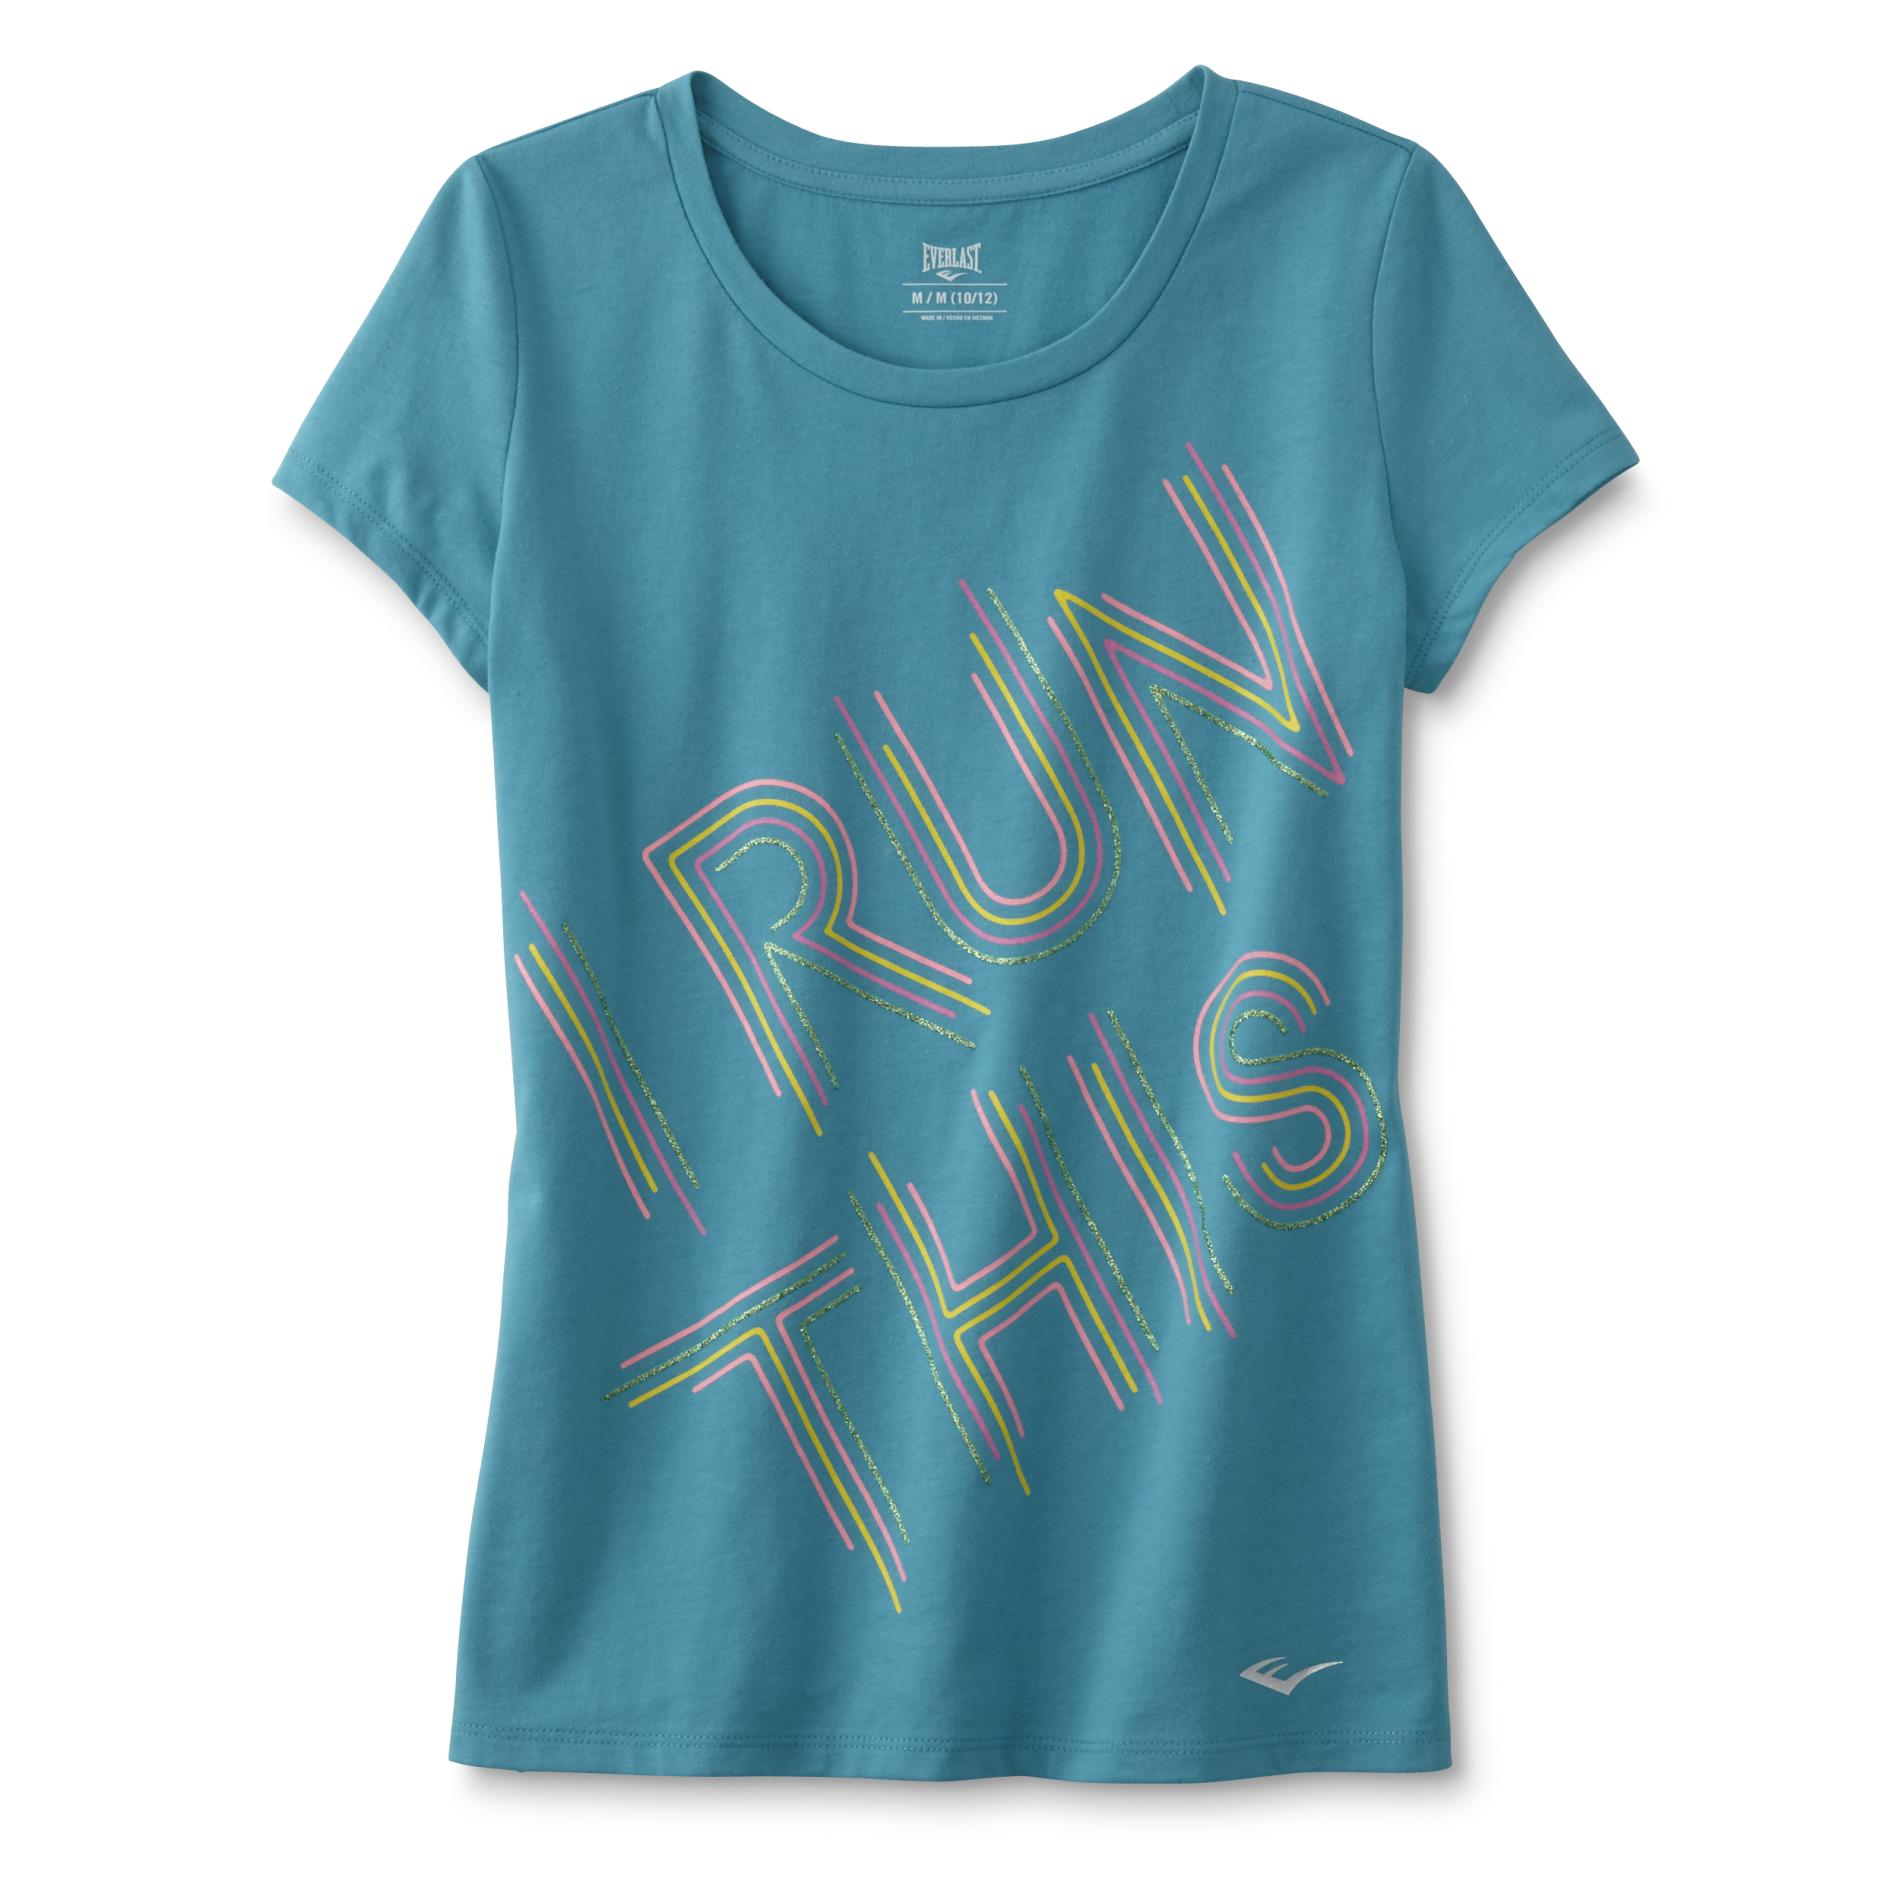 Everlast&reg; Girls' Graphic Athletic T-Shirt - I Run This